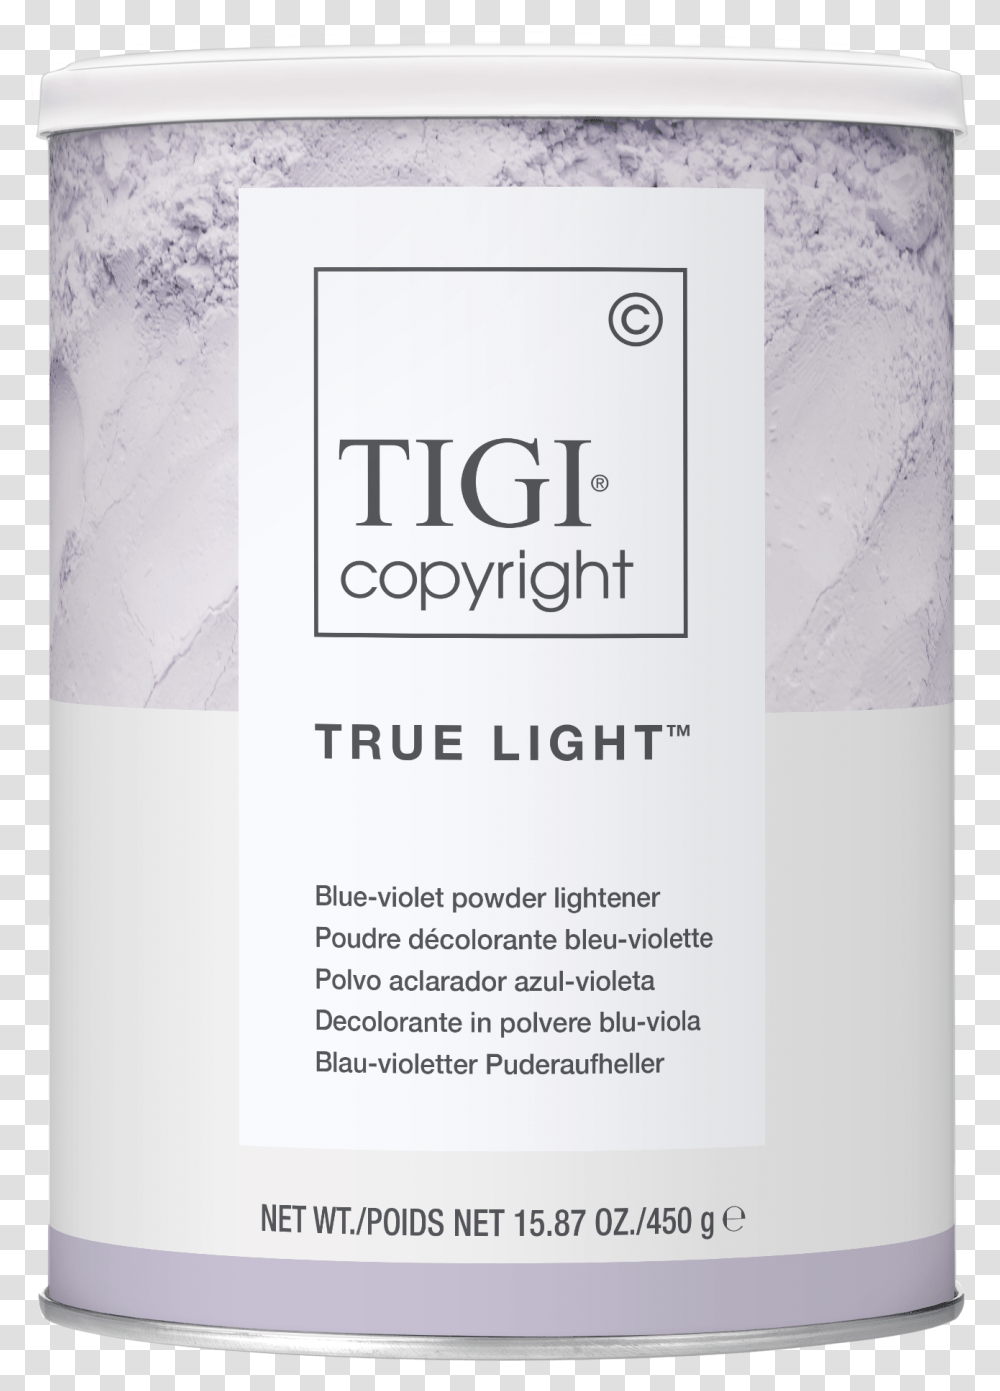 True Light & White Tigi Copyright Tin, Poster, Advertisement, Flyer, Paper Transparent Png